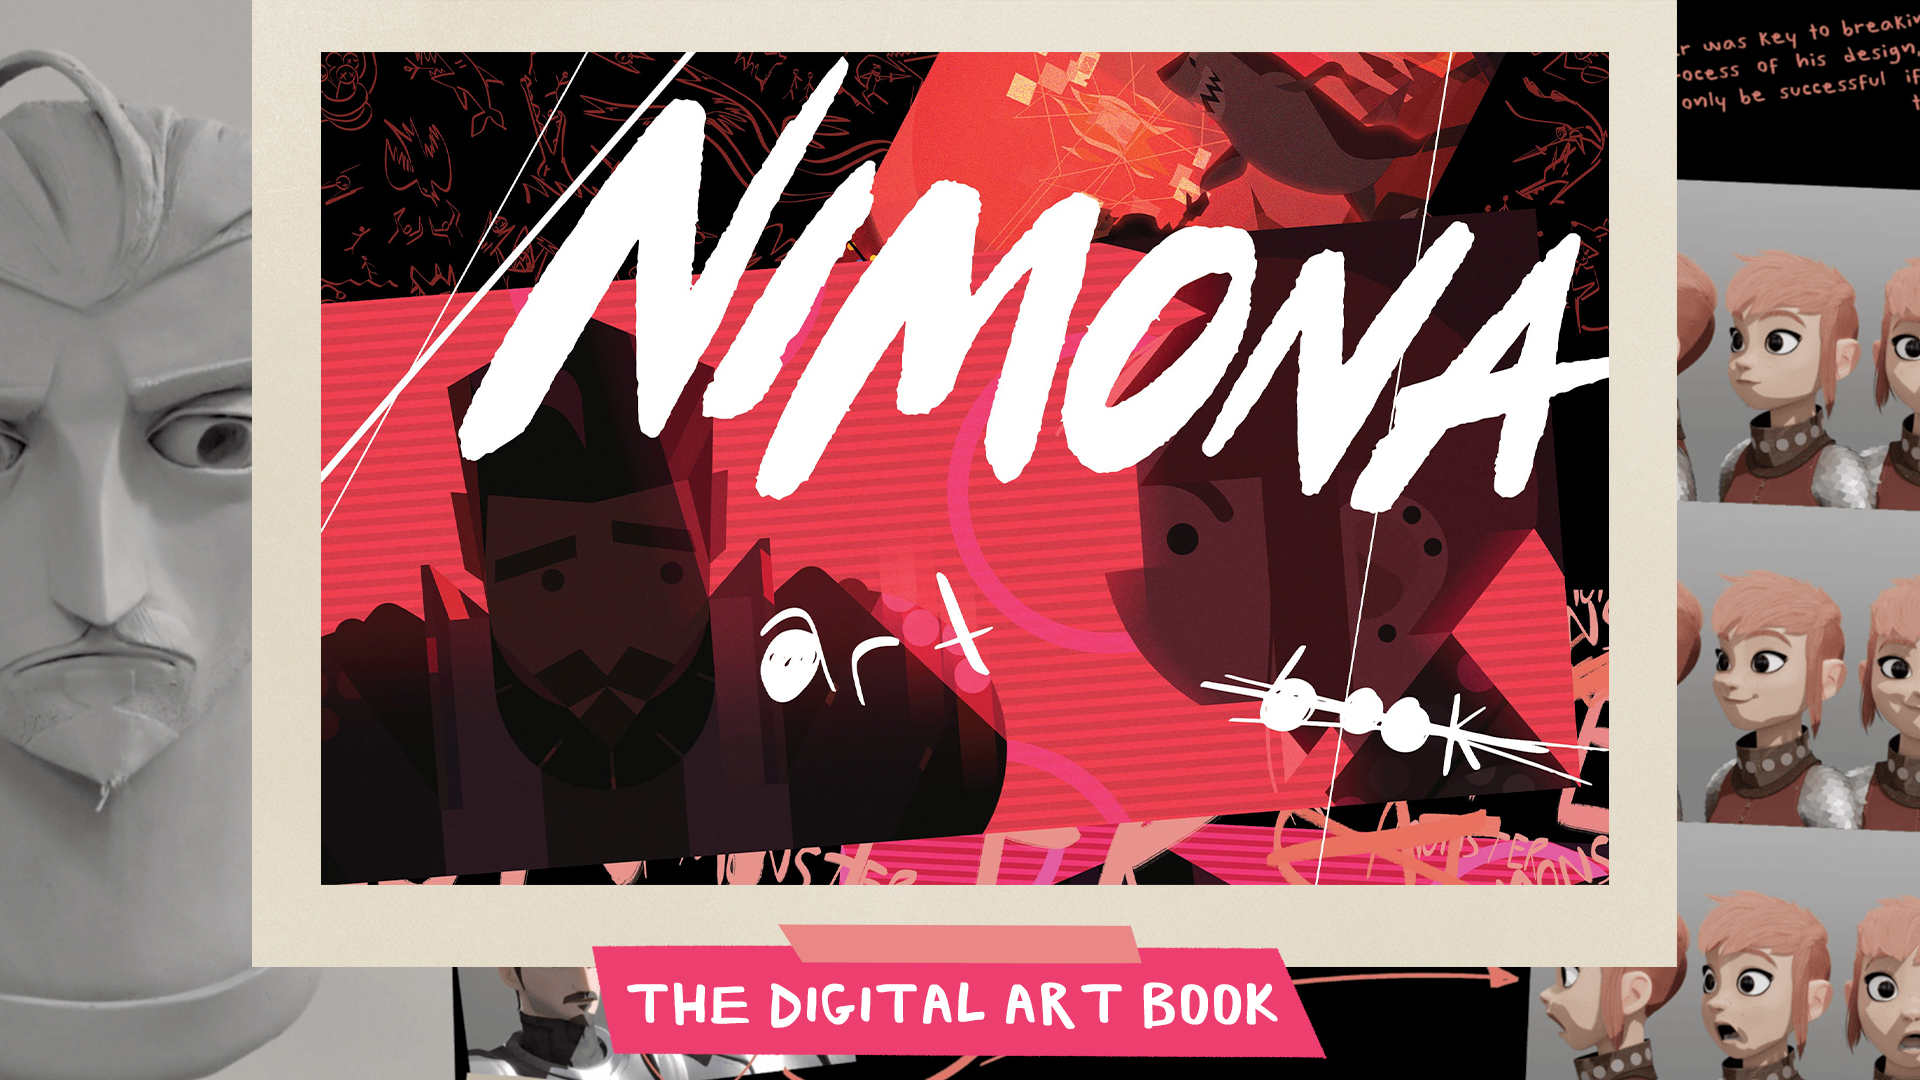 Nimona: A Netflix Film